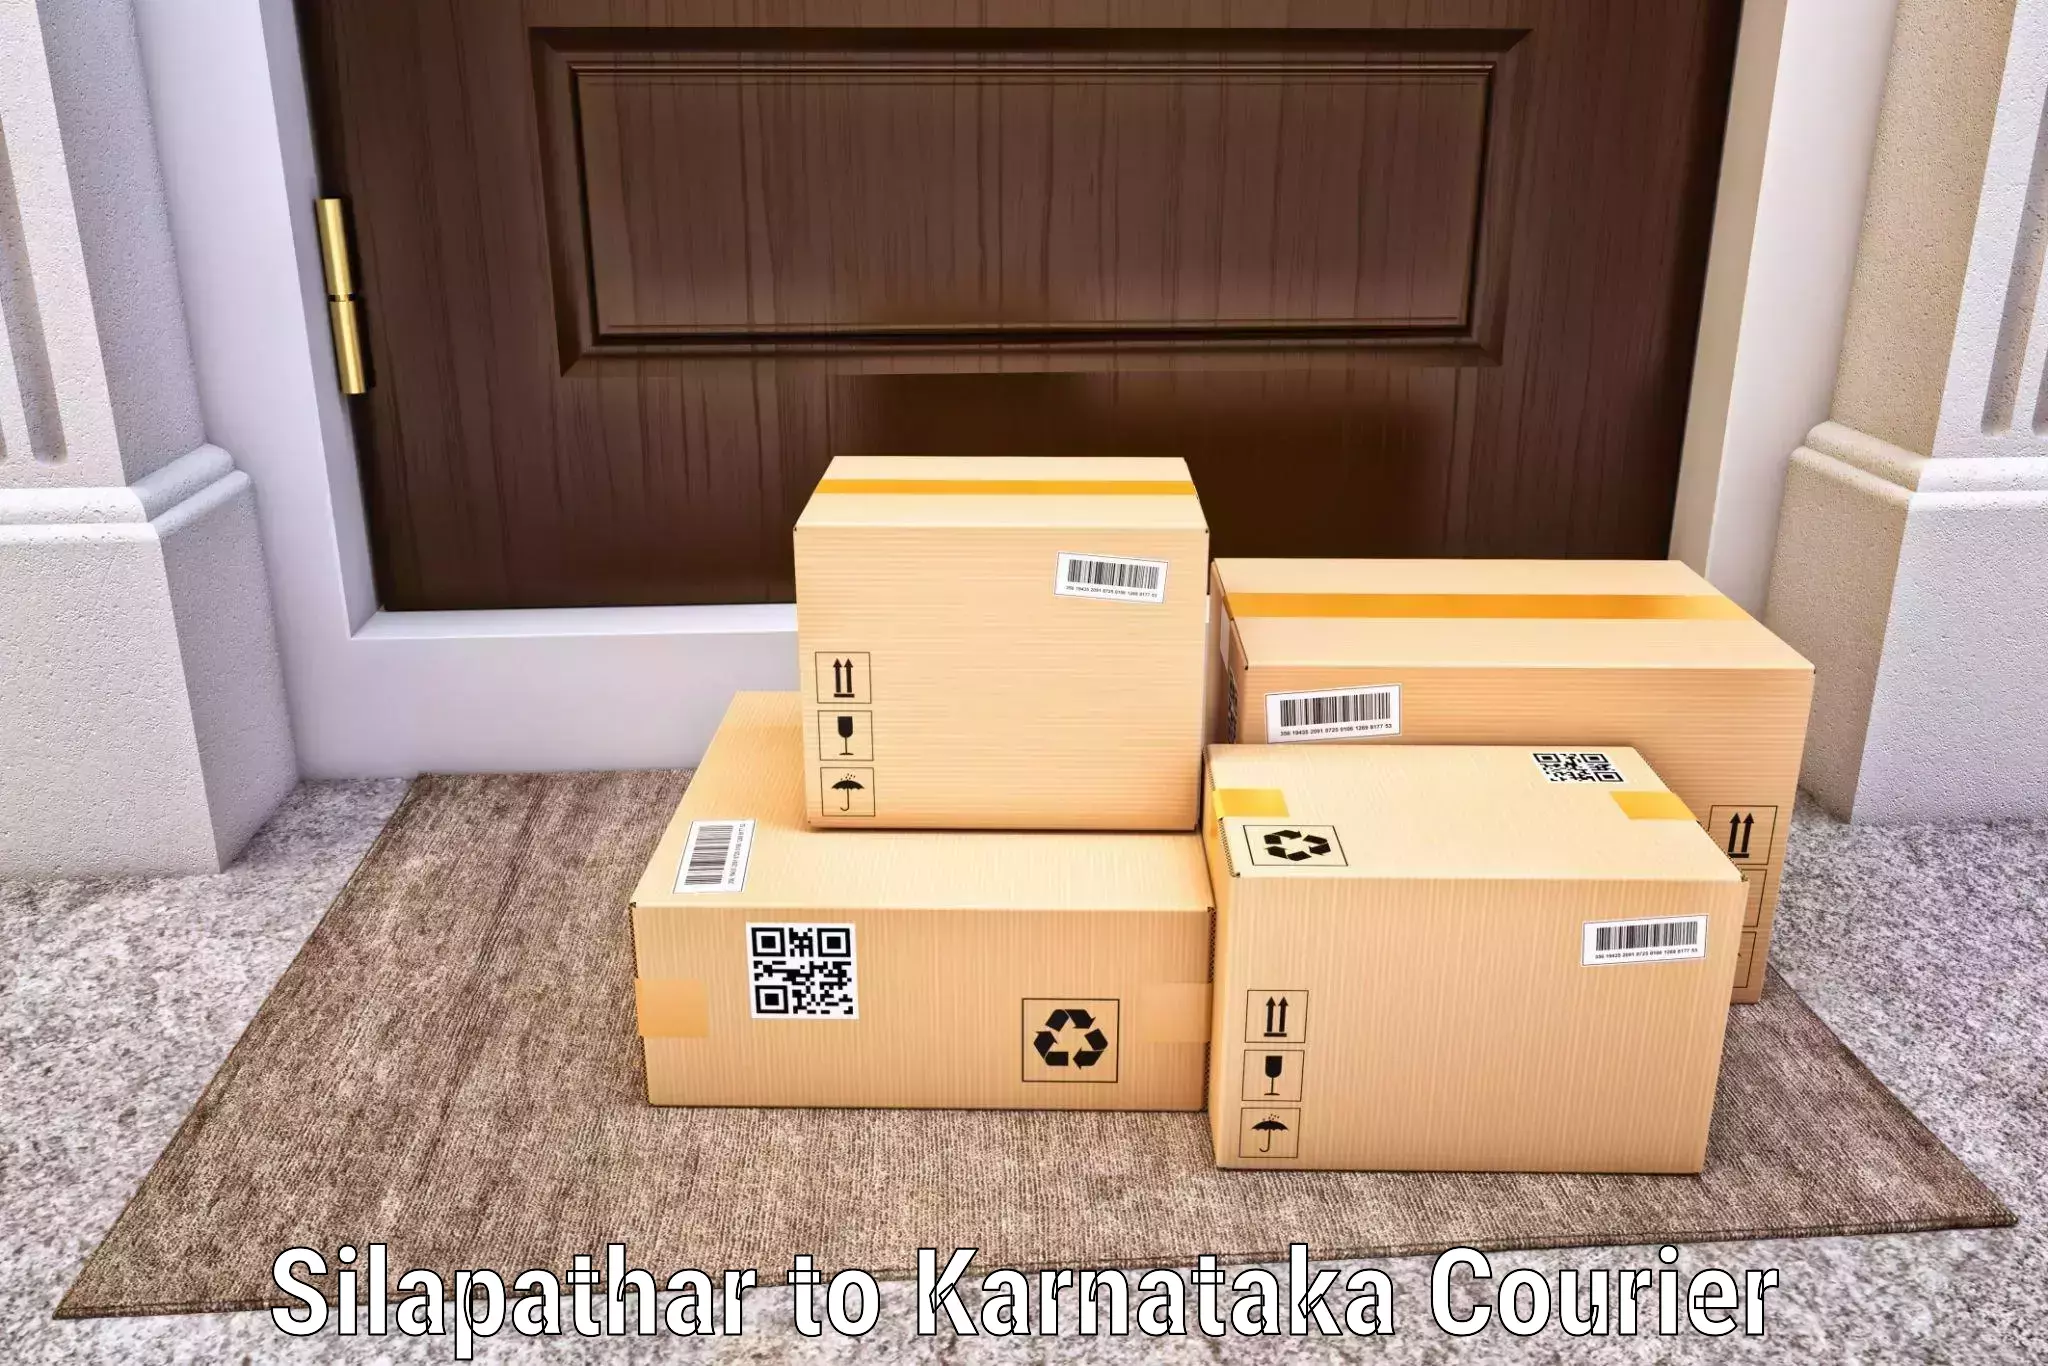 Subscription-based courier Silapathar to Karnataka